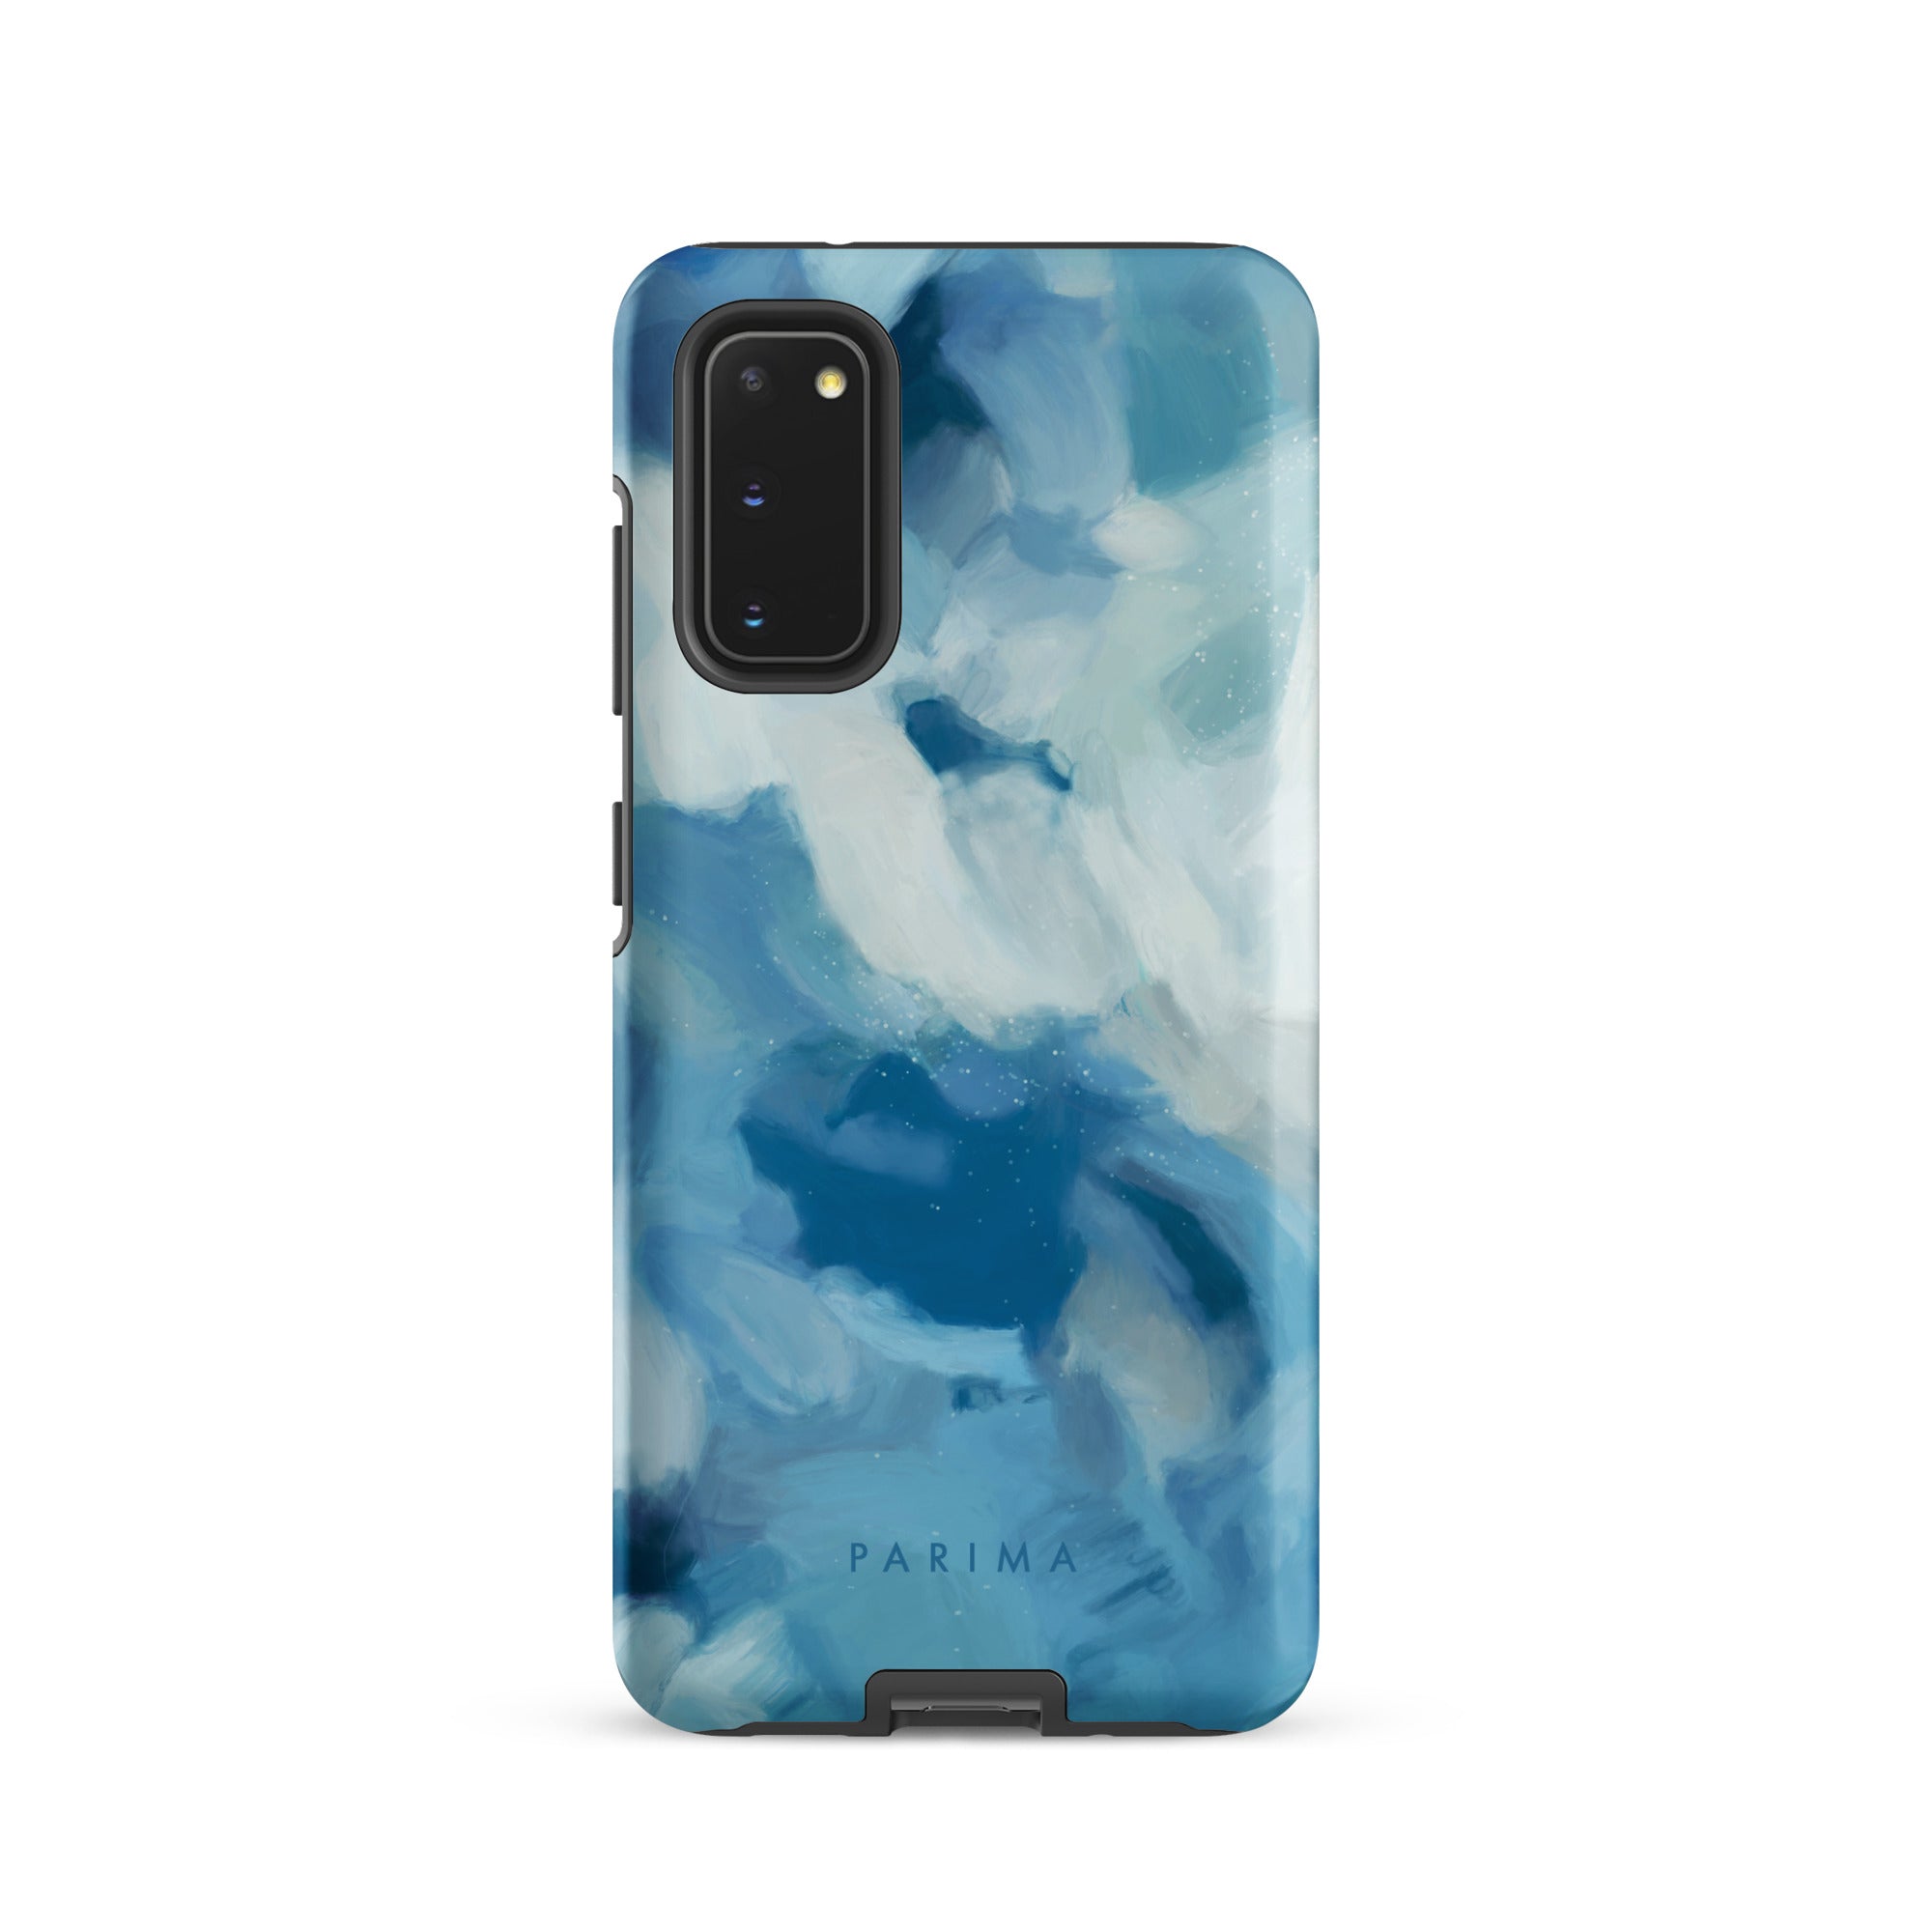 Liviana, blue abstract art on Samsung Galaxy S20 tough case by Parima Studio